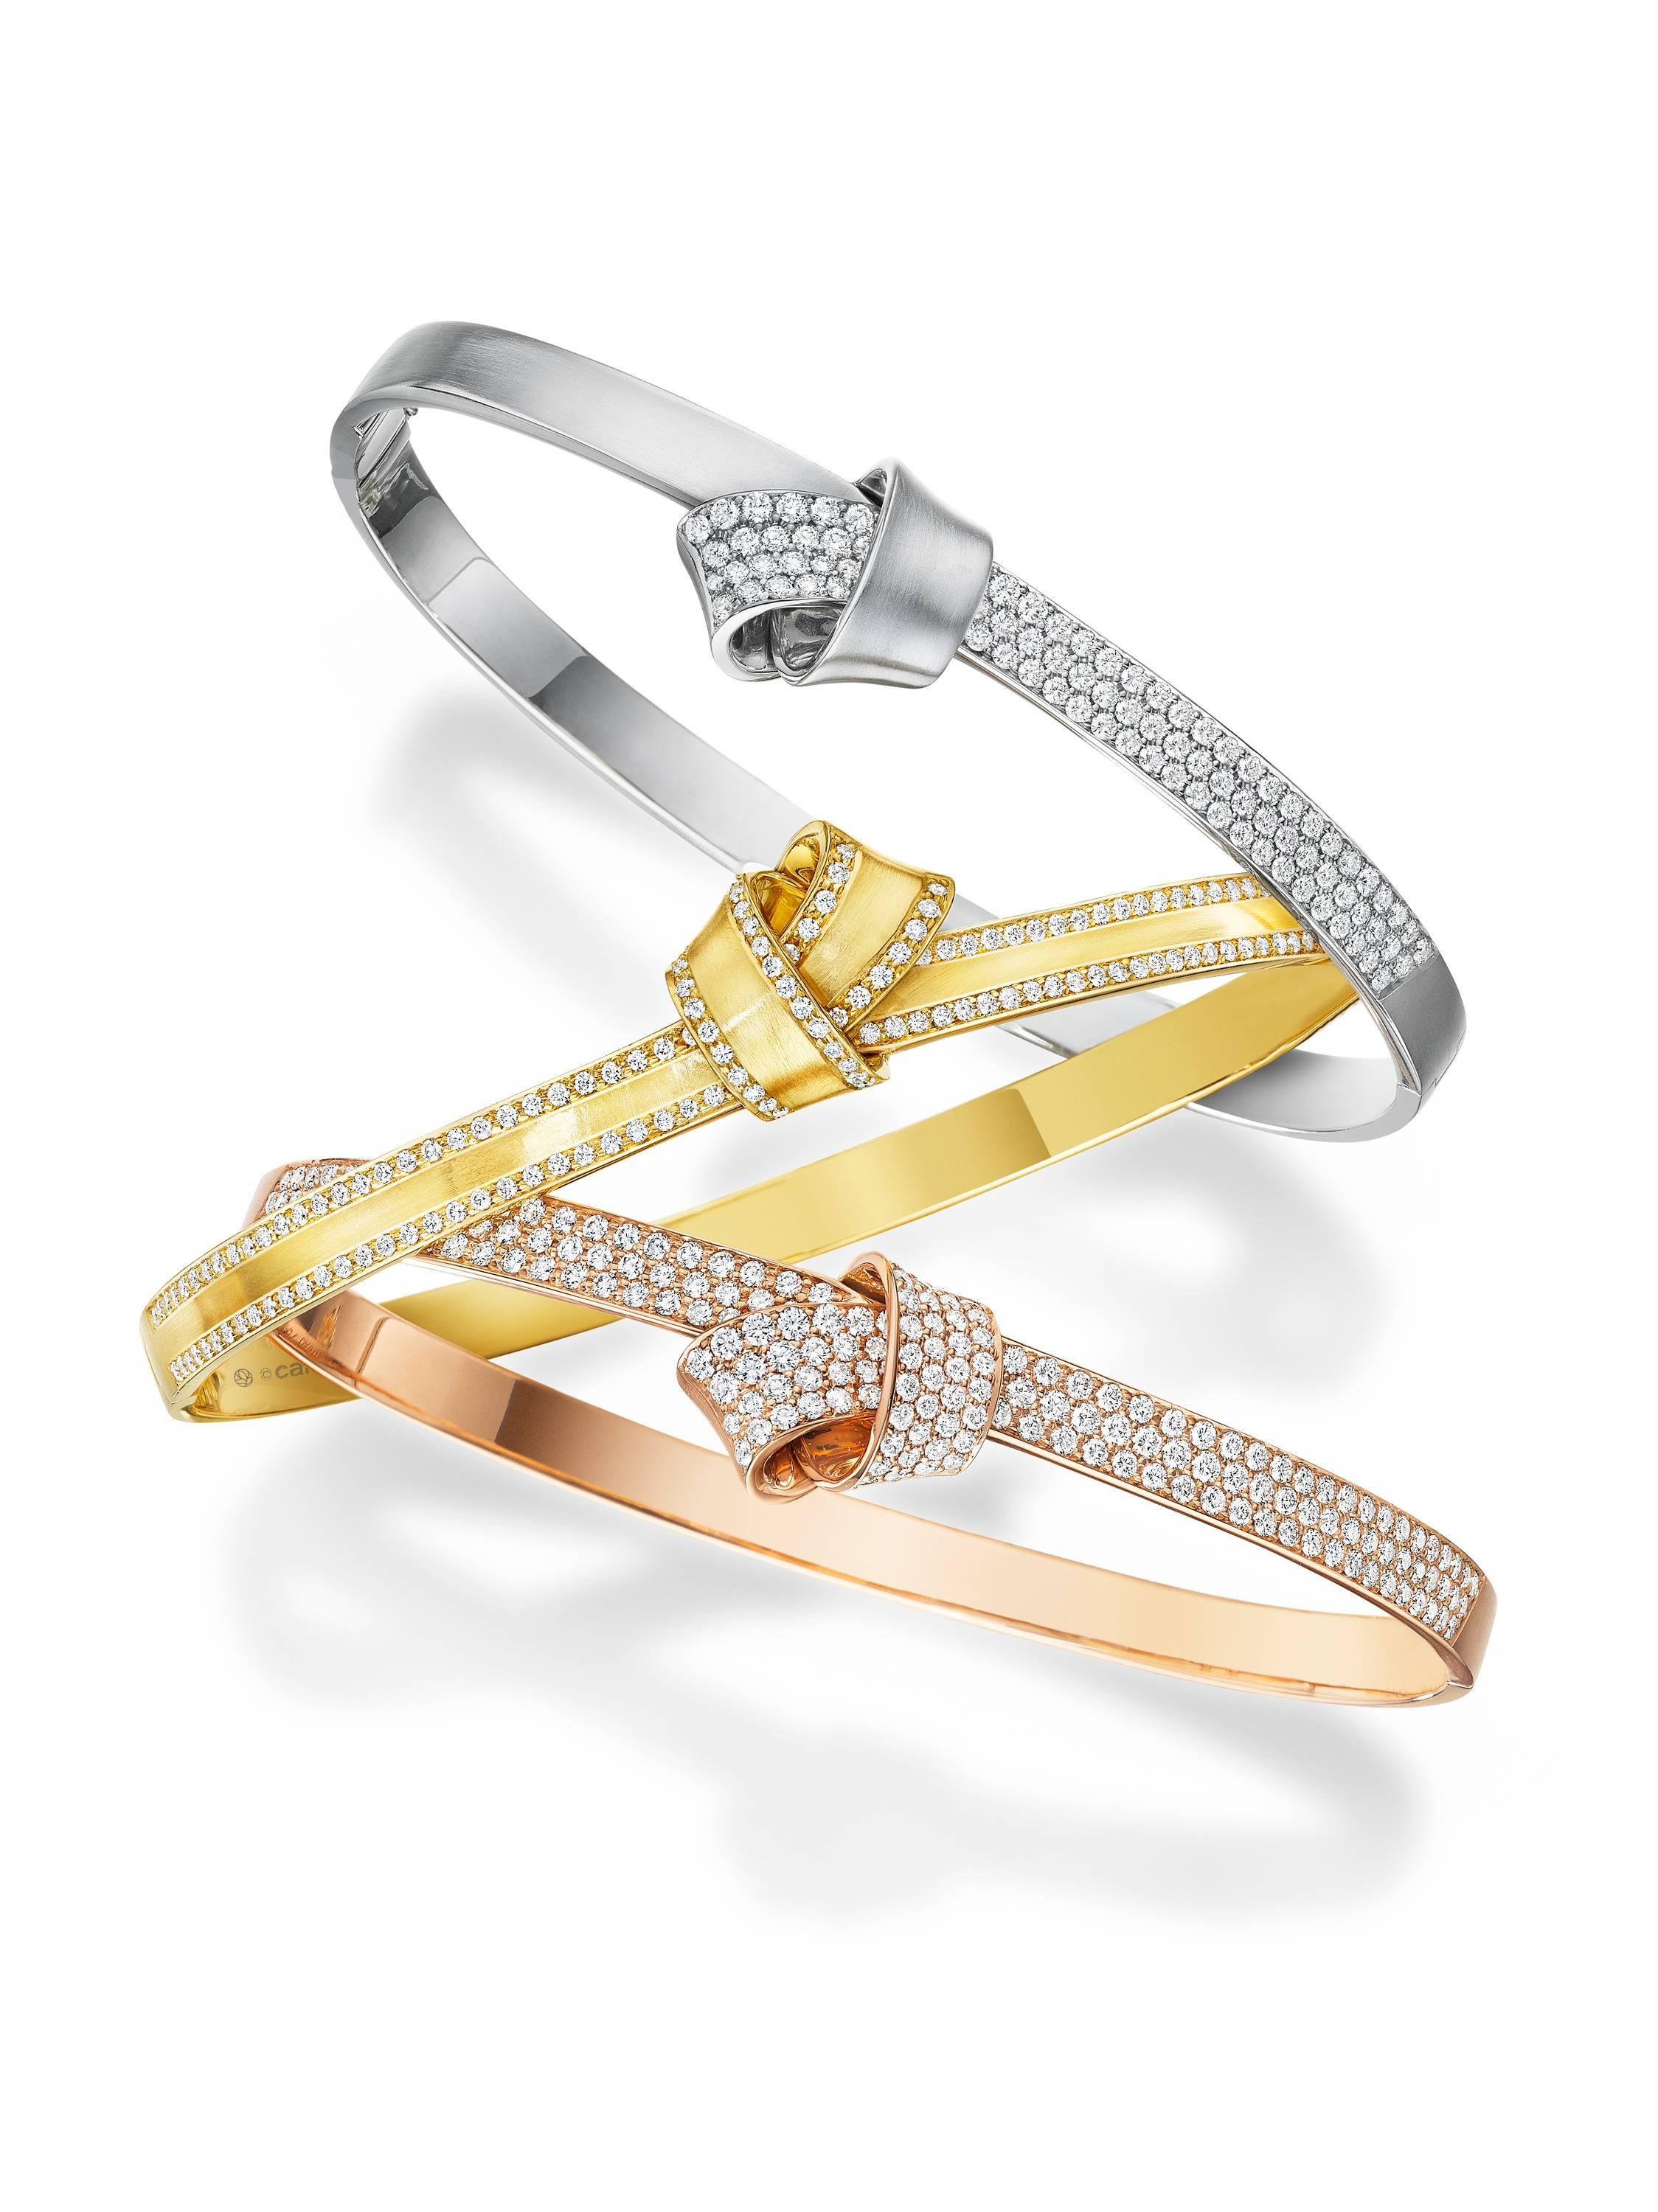 Contemporary Modern 18K White Gold and 1.03 Carat Diamond Carelle Knot Pave Bangle Bracelet For Sale